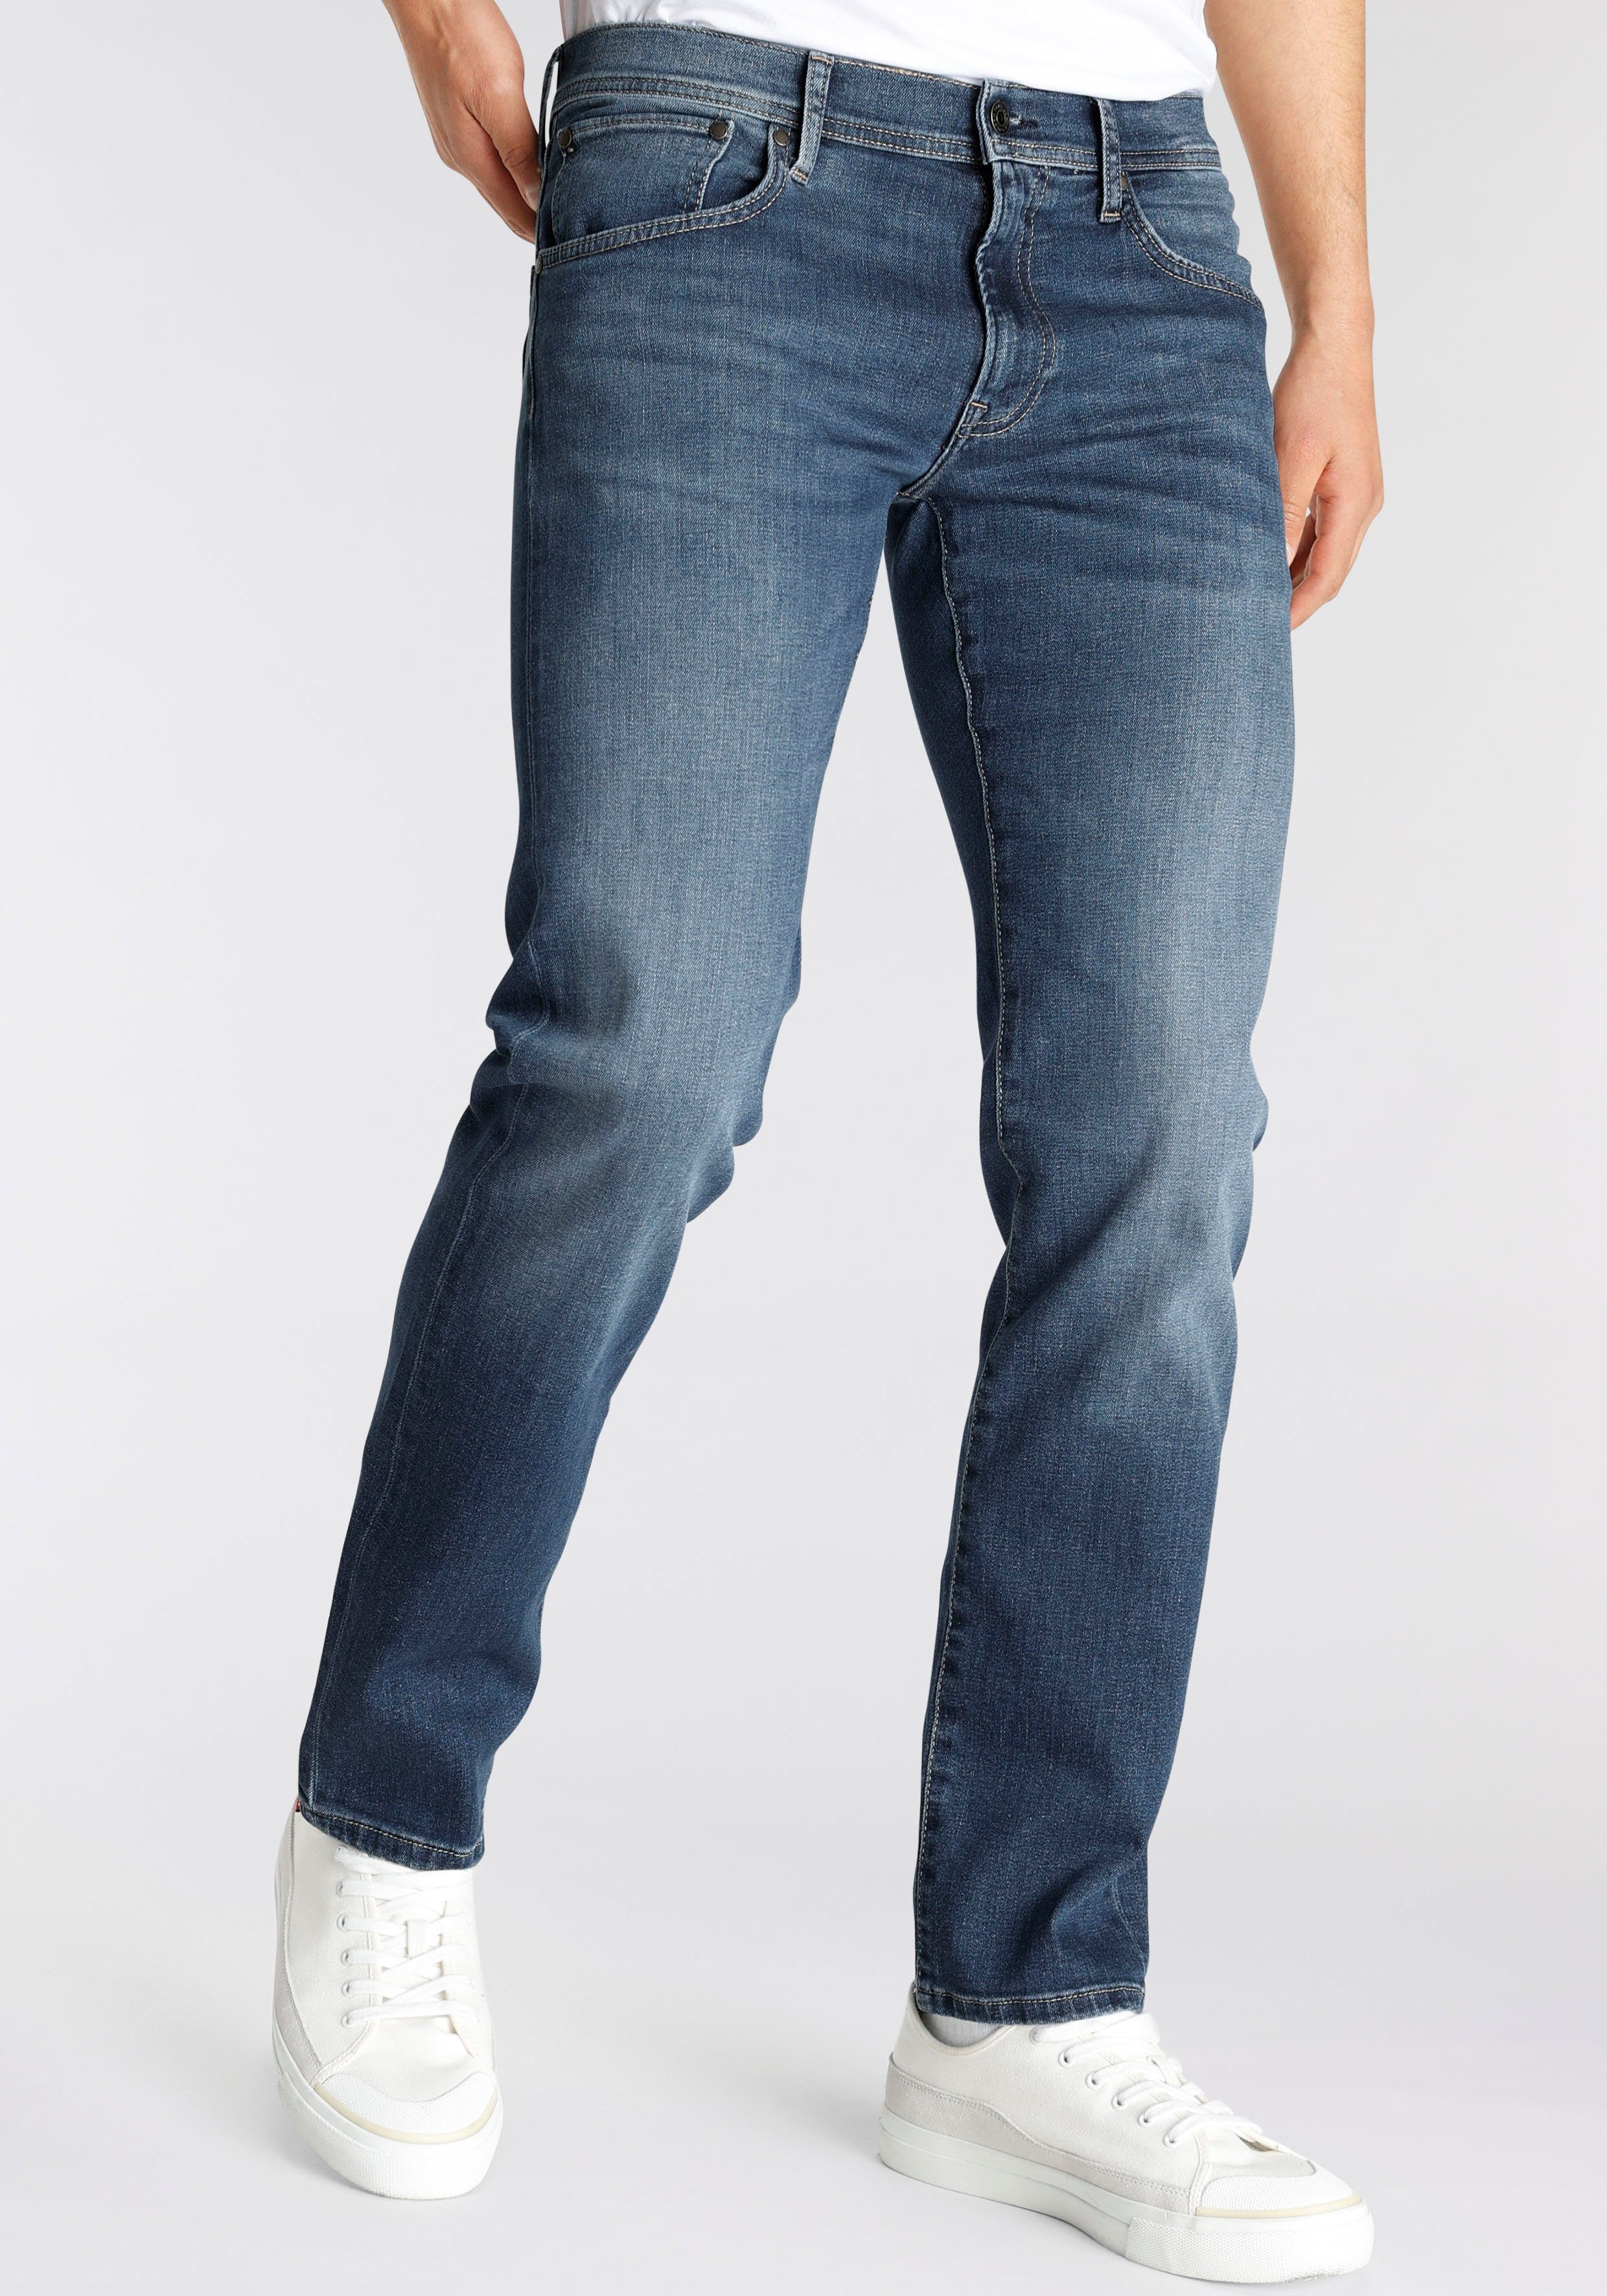 CANE Jeans Slim-fit-Jeans blue medium Pepe